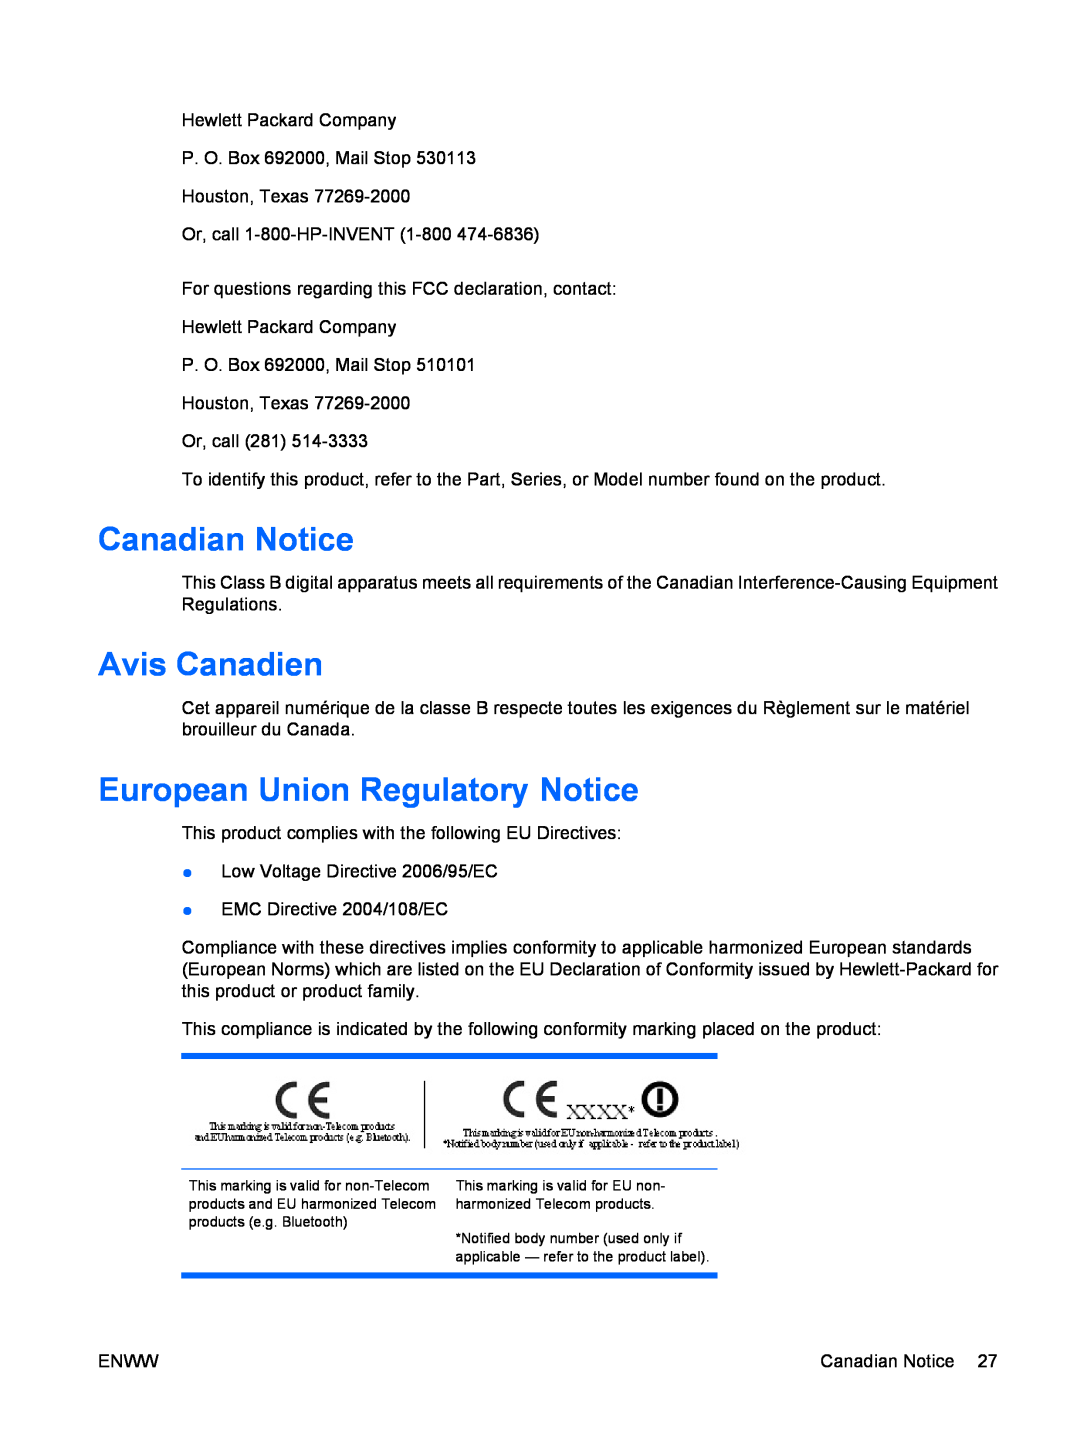 HP CQ1859E manual Canadian Notice, Avis Canadien, European Union Regulatory Notice 